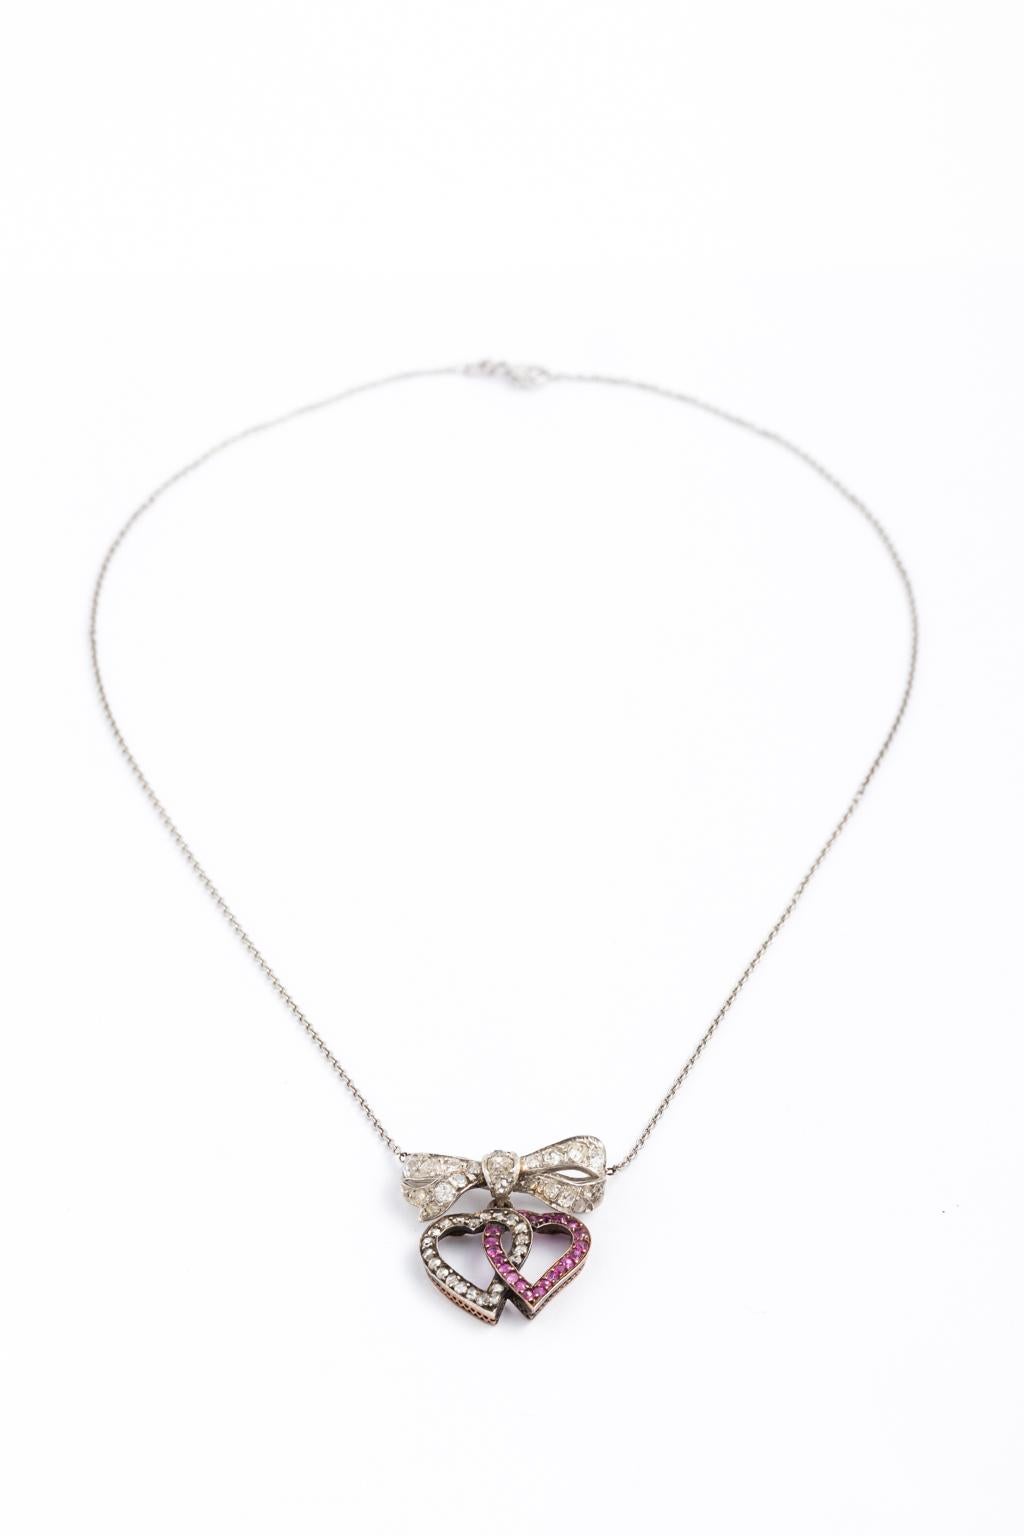 Old Mine Cut Platinum Ruby Diamond Double Heart Pendant Necklace For Sale